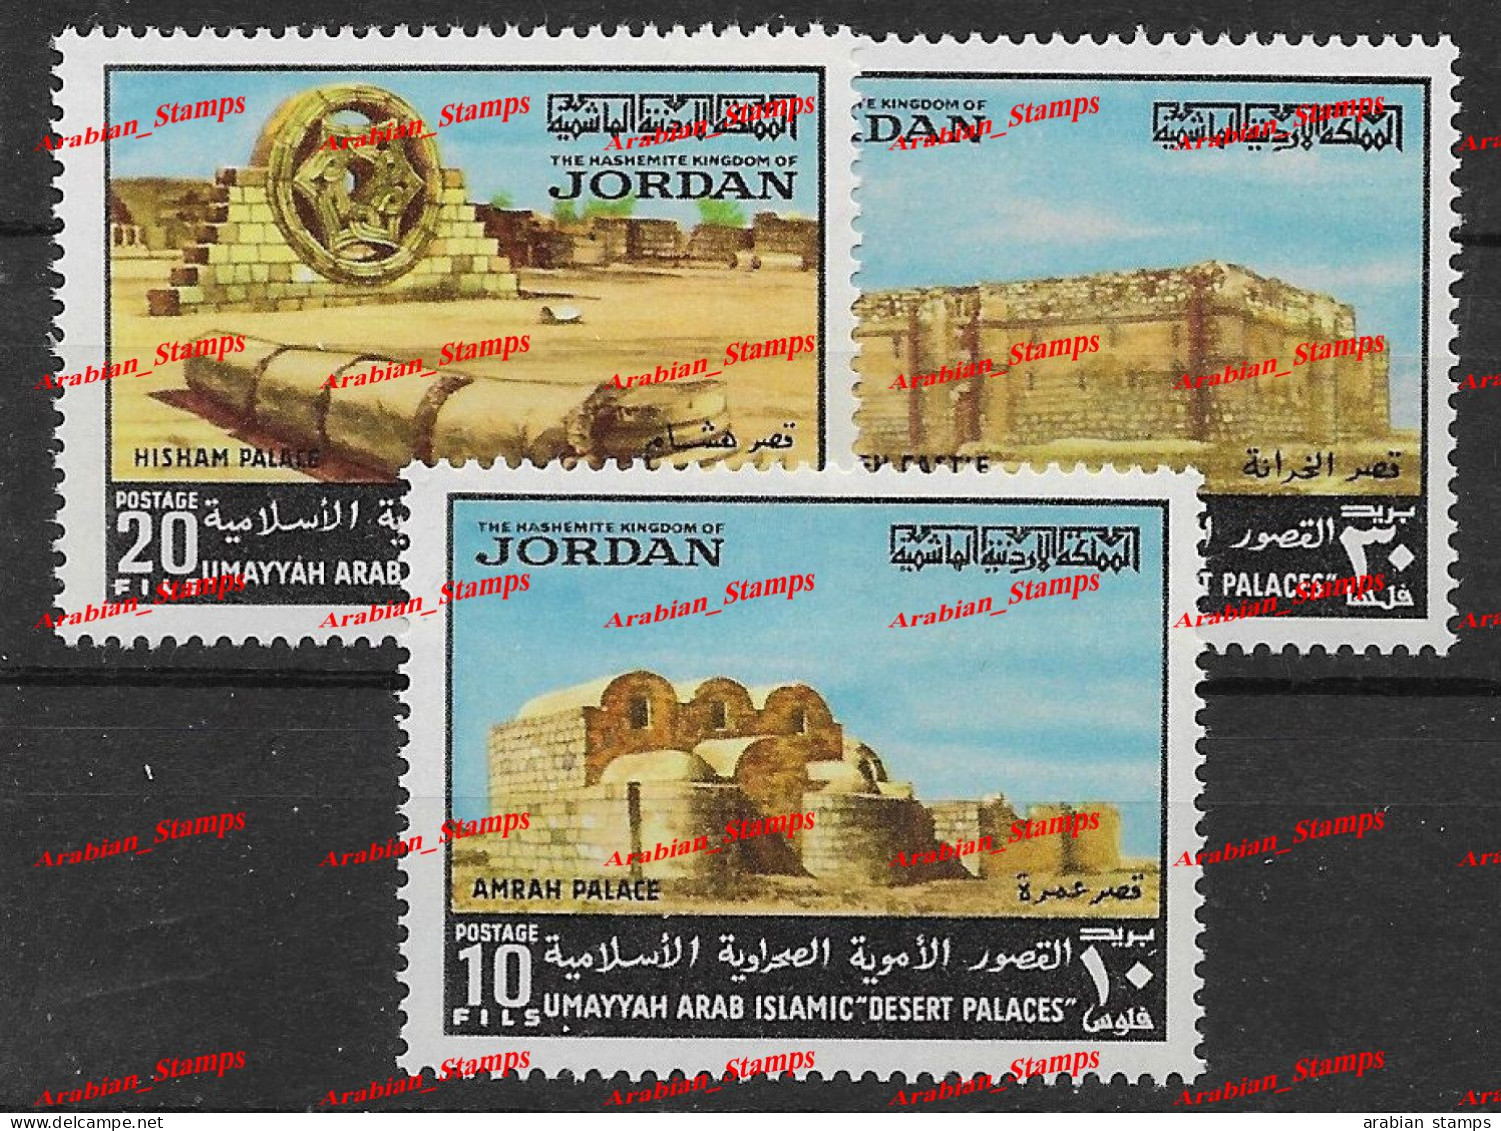 HASHIMATE KINGDOM OF JORDAN JORDANIE 1974 MNH DESERT RUINS DESERT PALACES MONUMENTS AMRA PALACE KHARRANEH CASTLE - Jordan